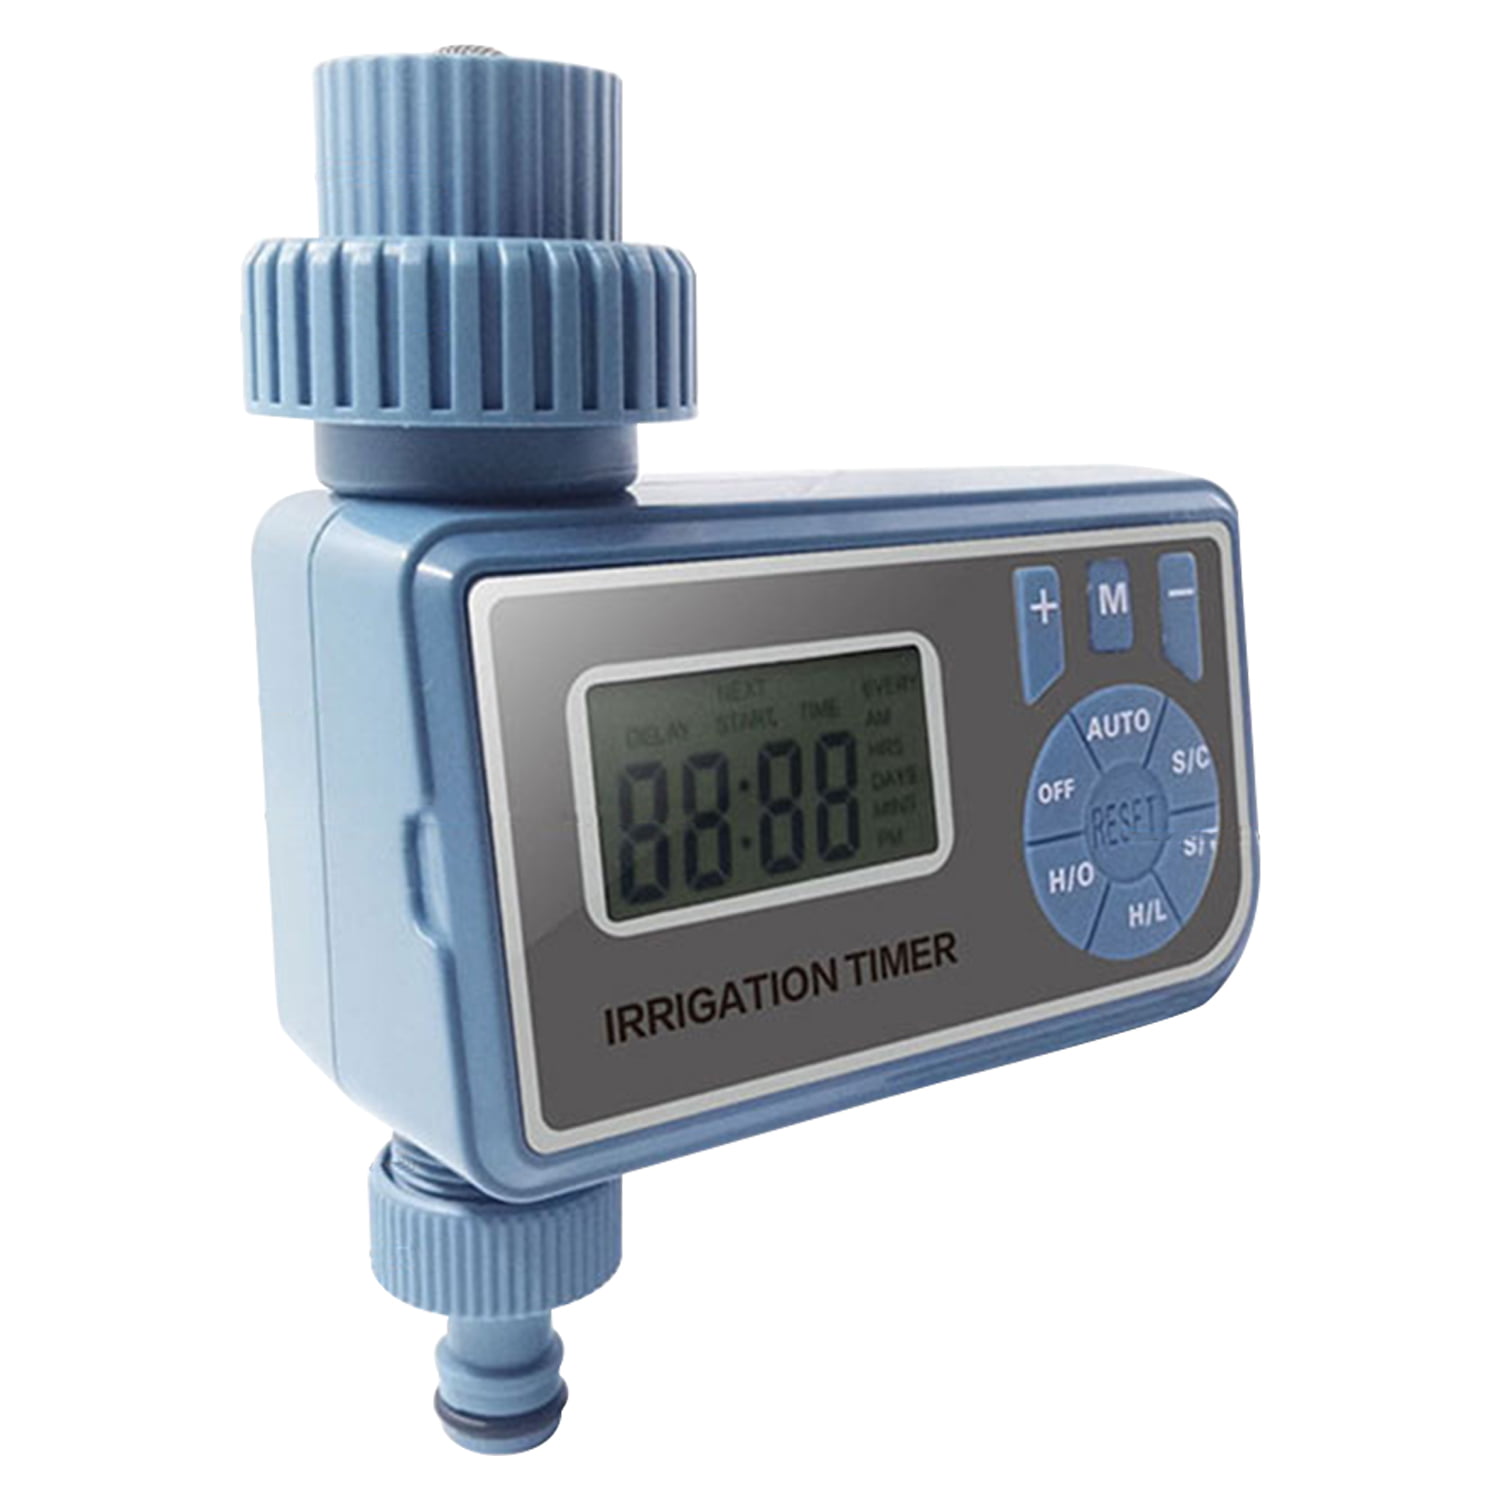 LCD Waterproof Digital Electronic Water Timer Garden Irrigation Controller Blue